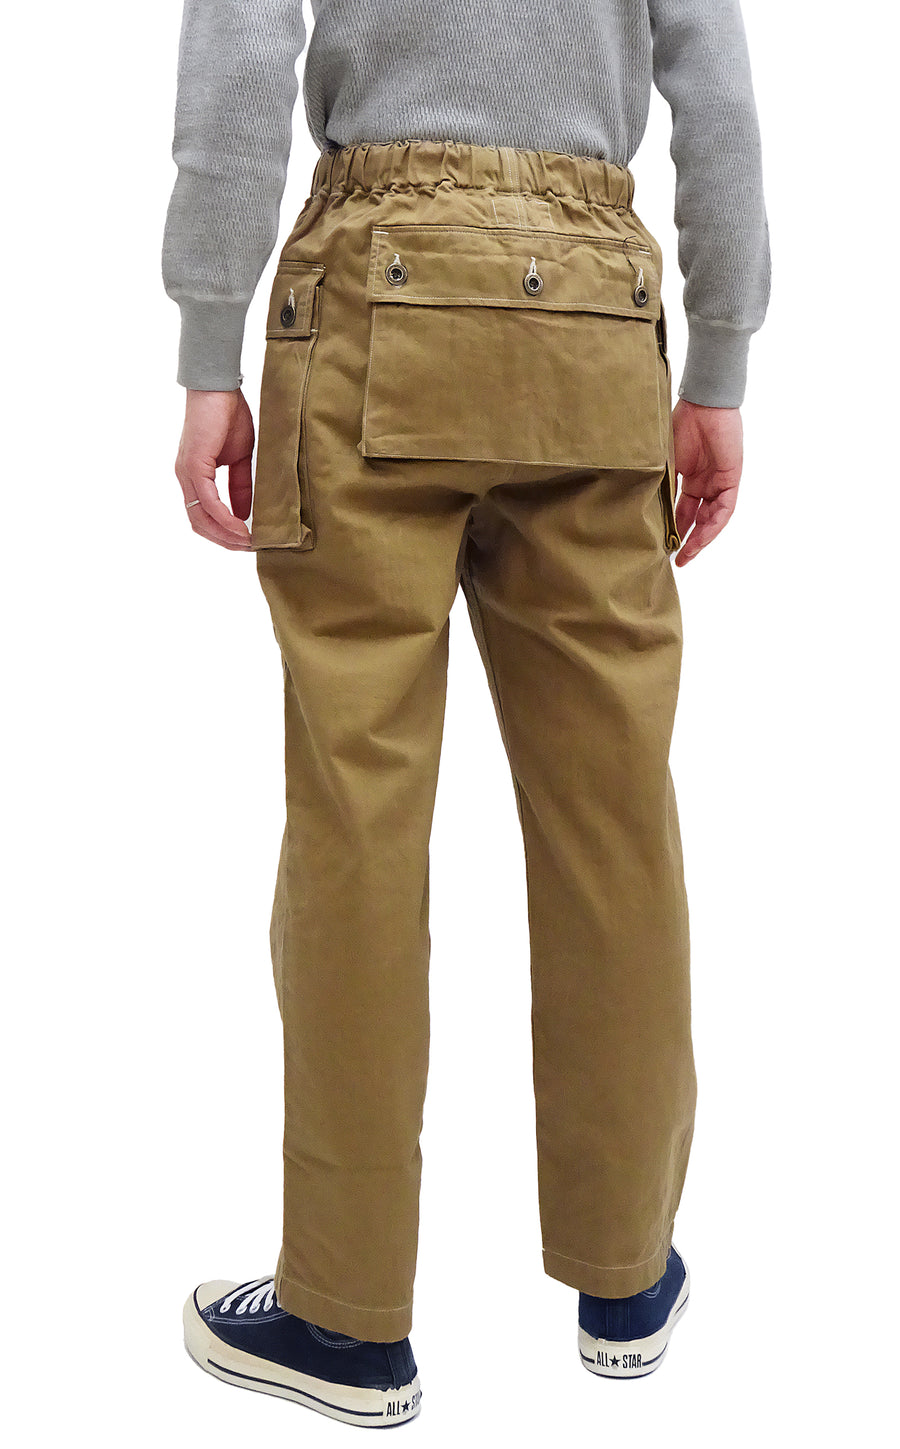 Stylish and Functional Men's Khaki Cargo Pants with Drawstring Waist